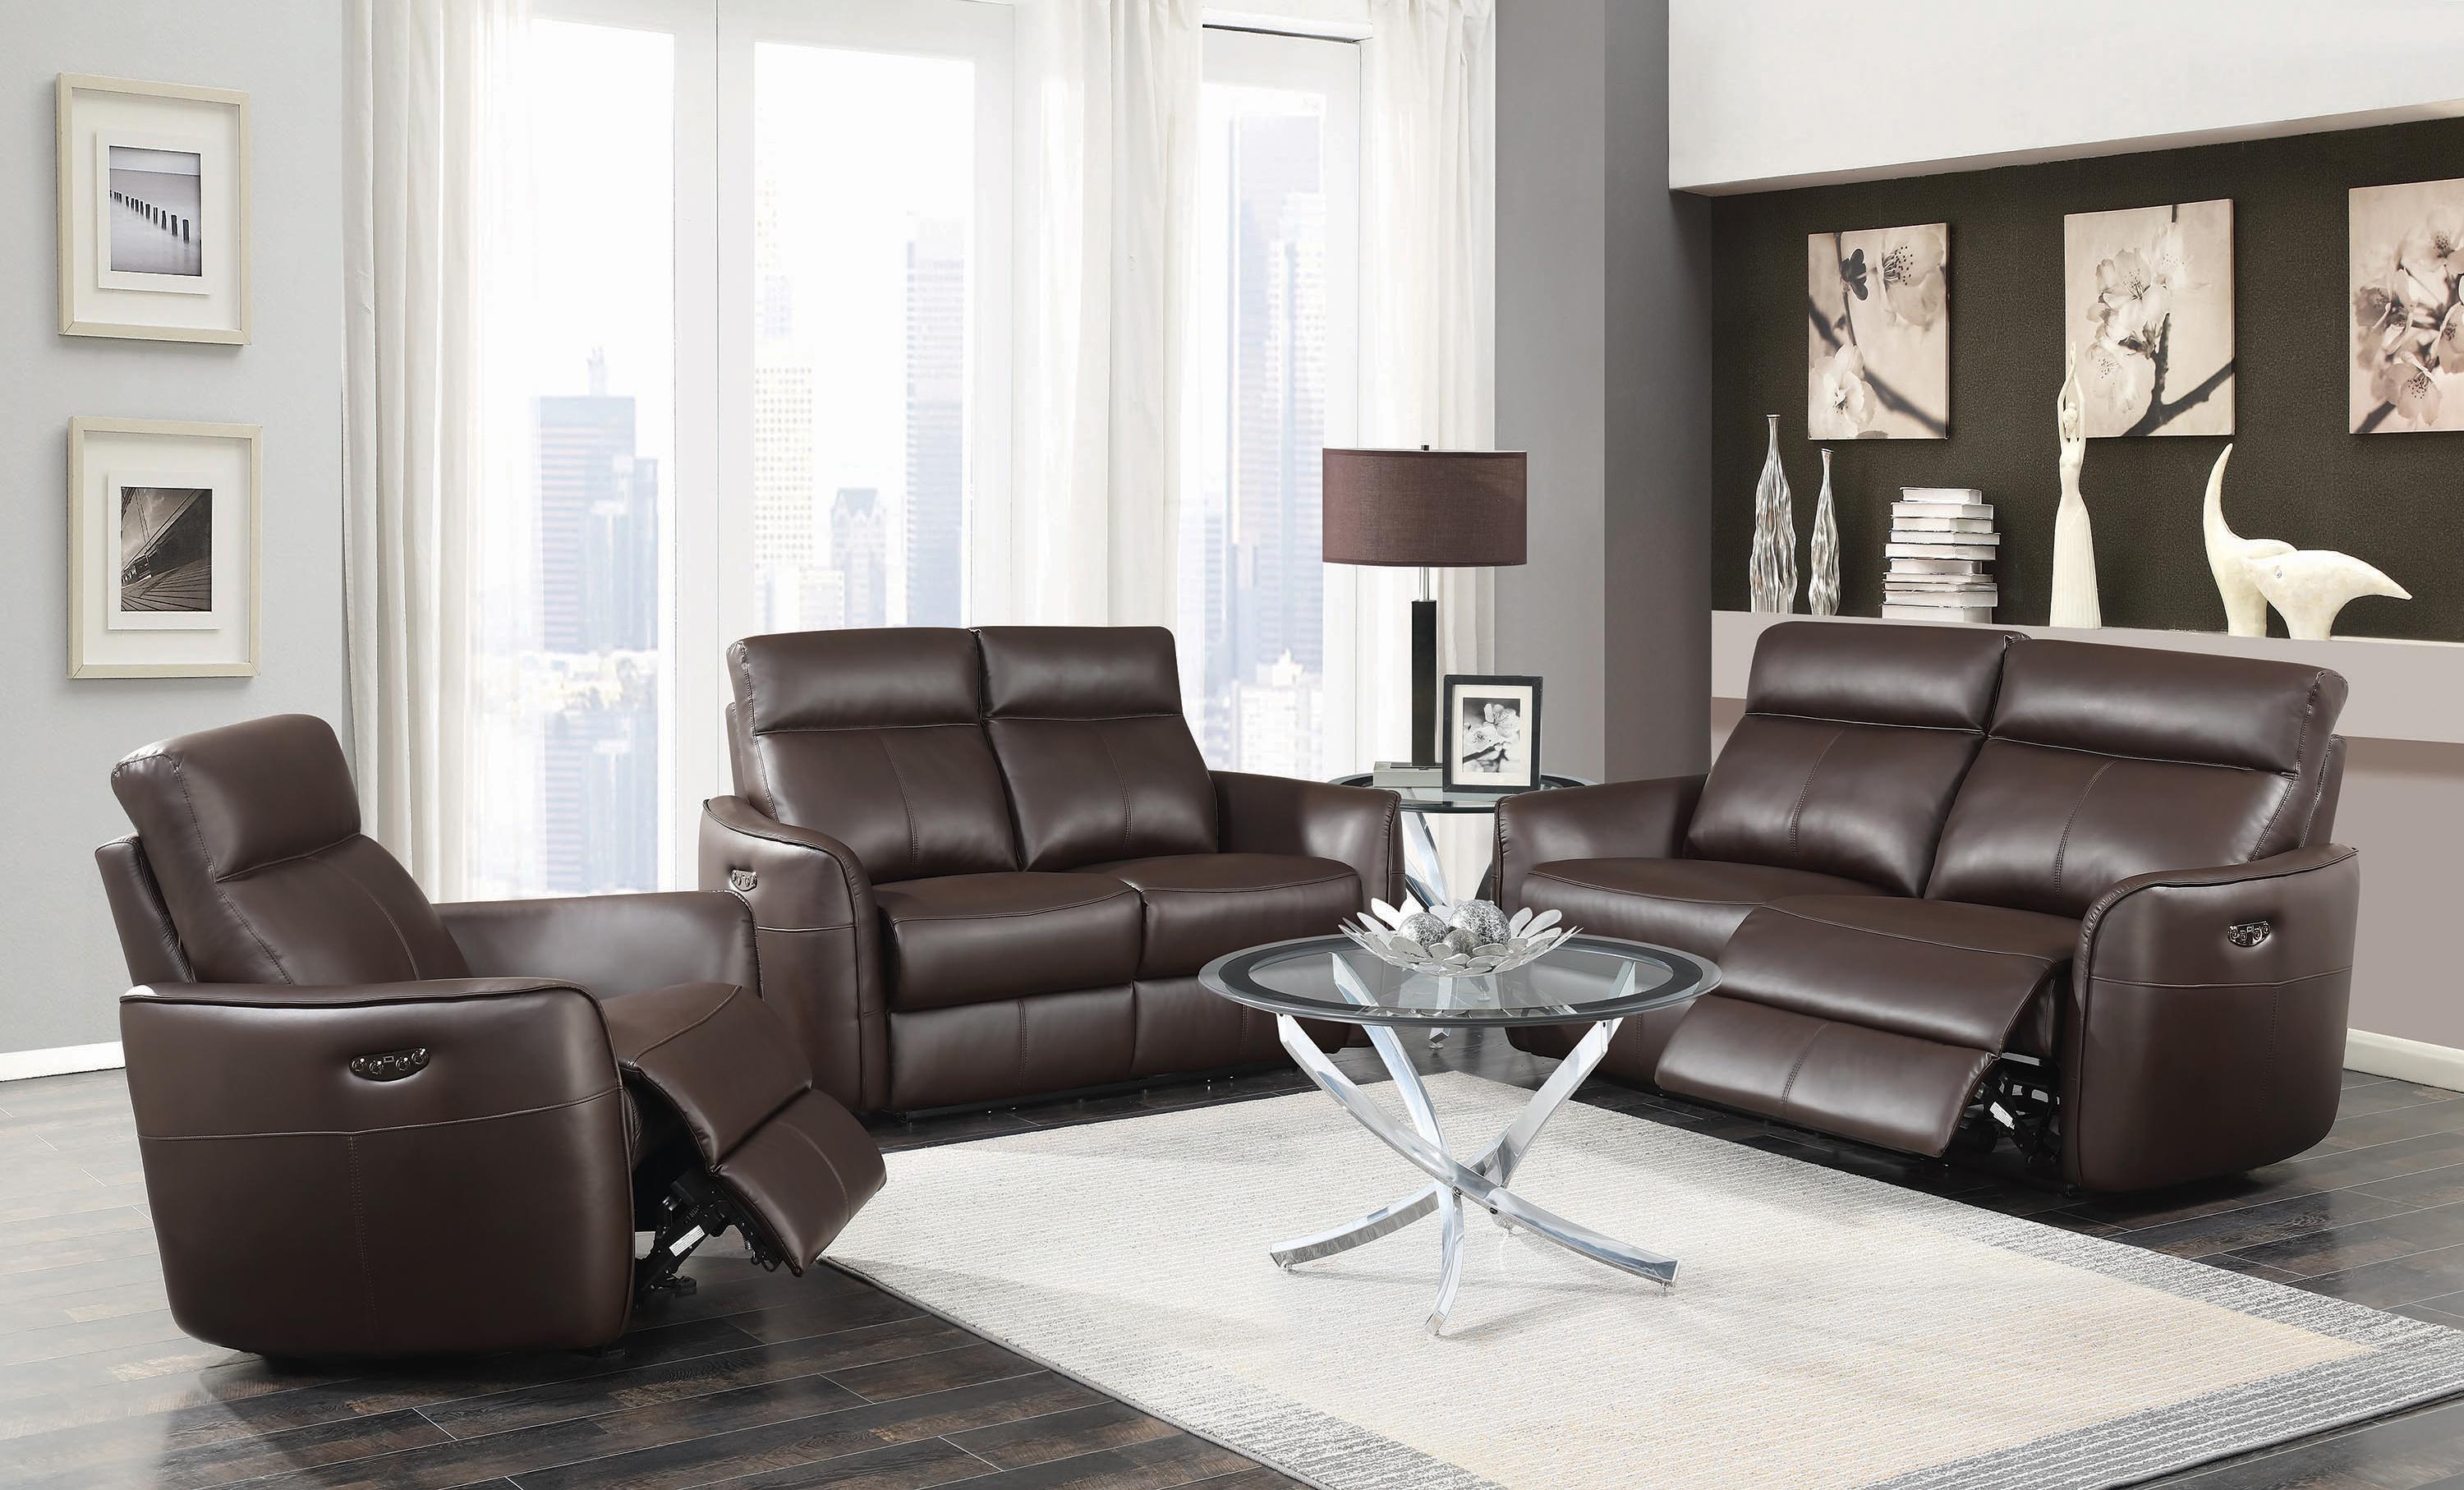 Modern Power2 sofa Scranton 650211PP in Brown Leather